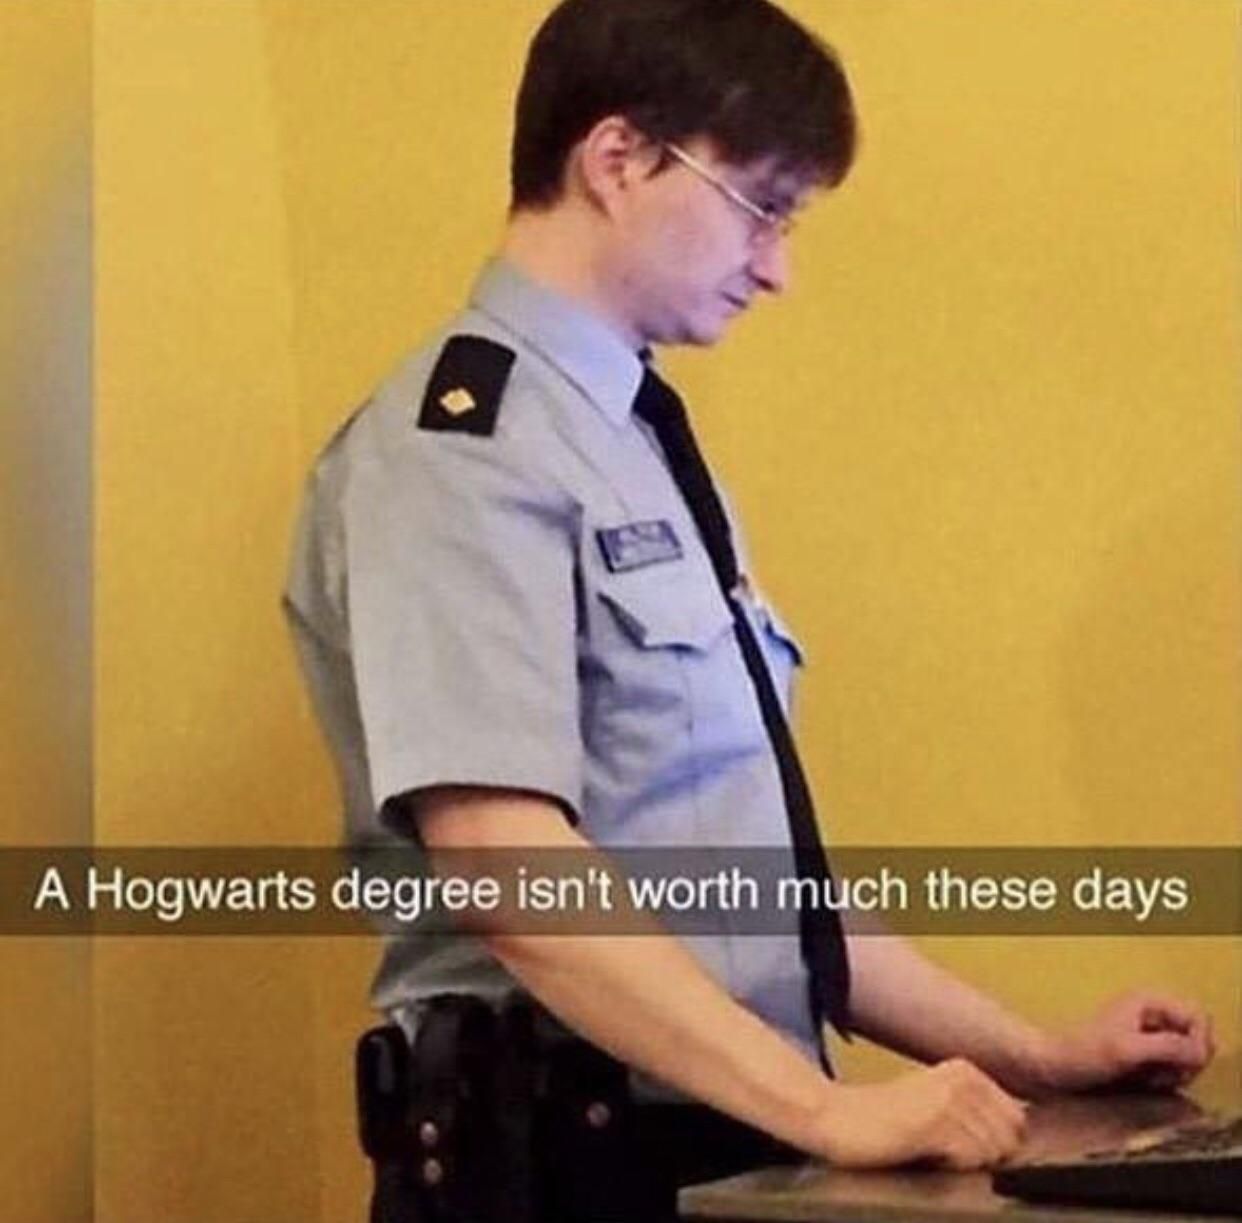 Hogwarts Alumni not doing too well...